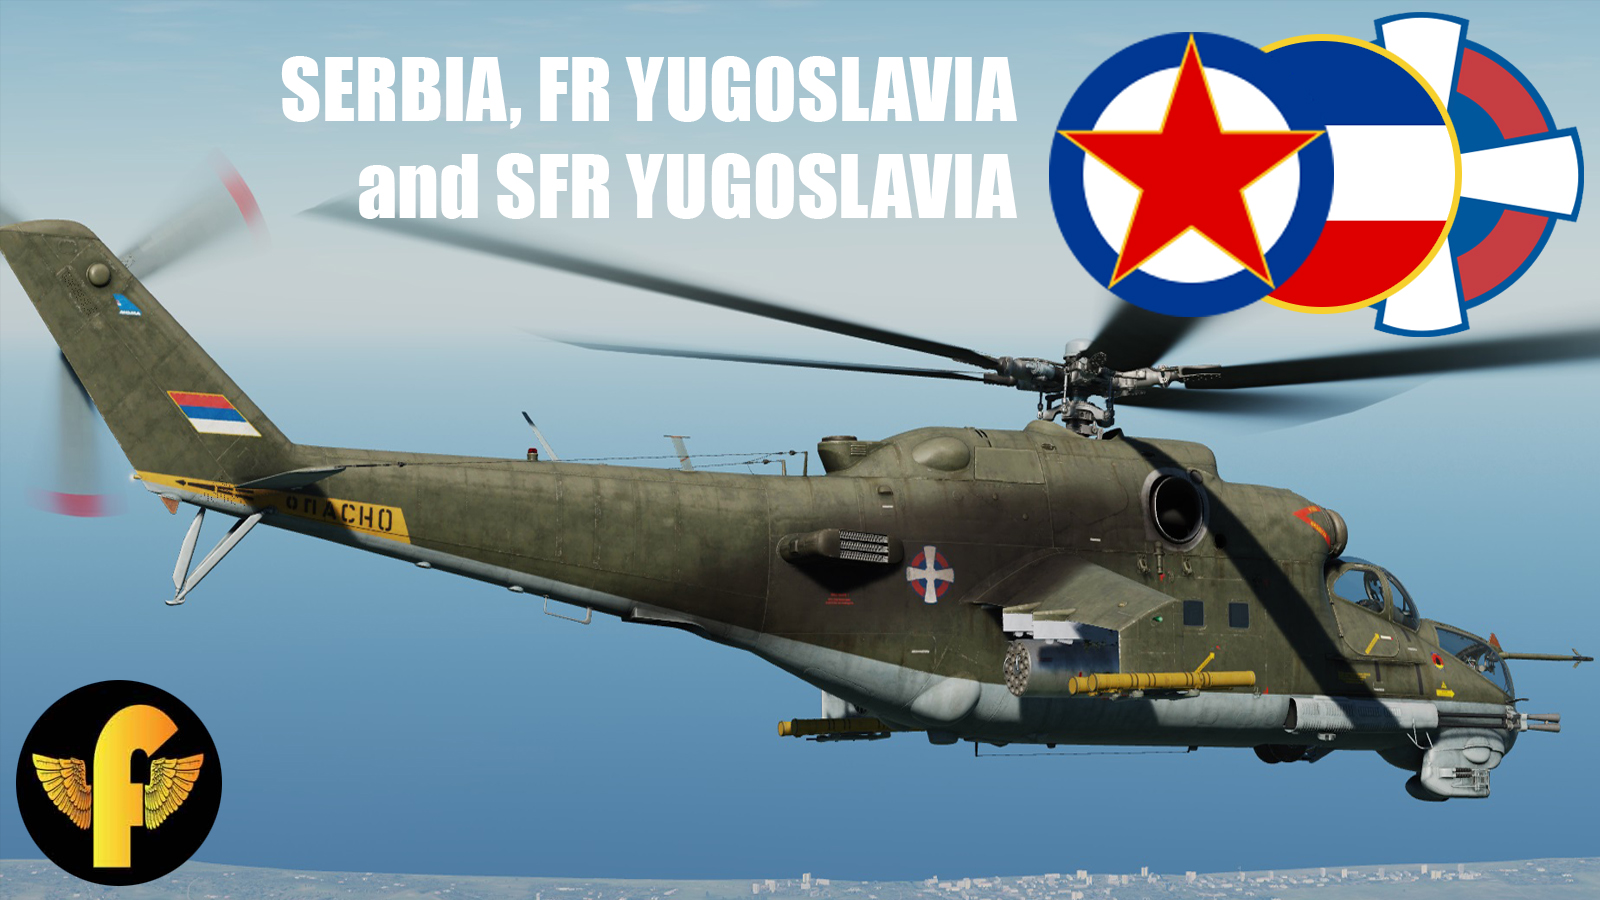 Senke 714. pohe / Shadows  Republic of Serbia / FR Yugoslavia / SFR Yugoslavia